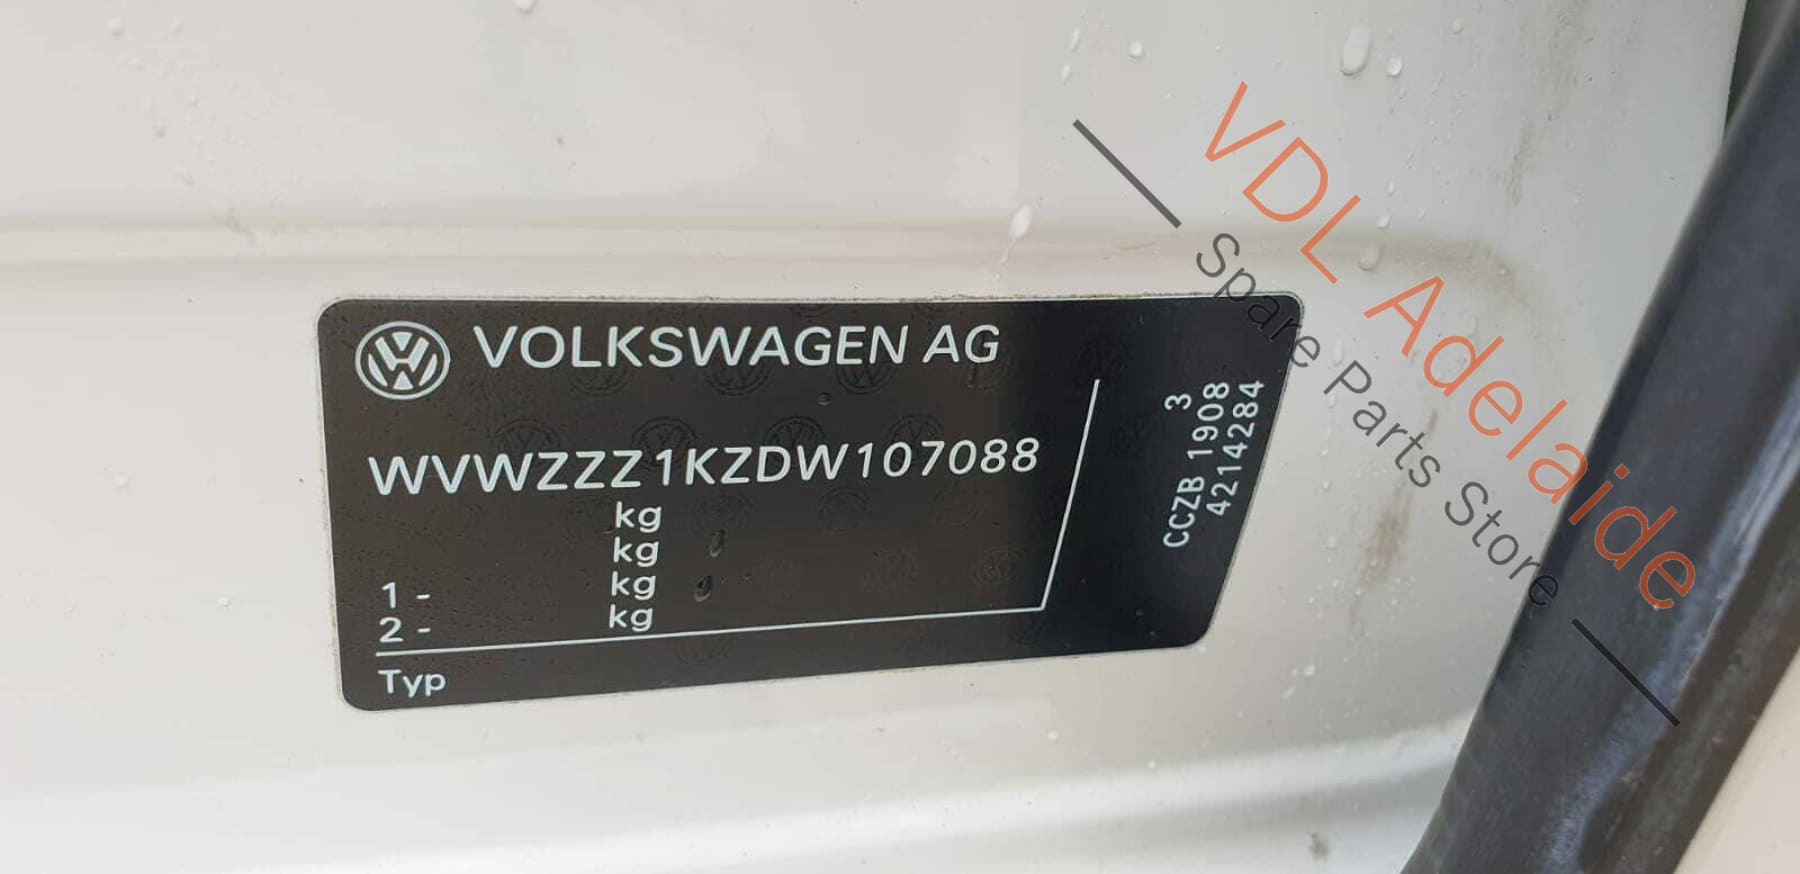 Volkswagen VW Golf R GTi Mk6 Bonnet Release Handle Grip for Lid Lock Cable NOR4